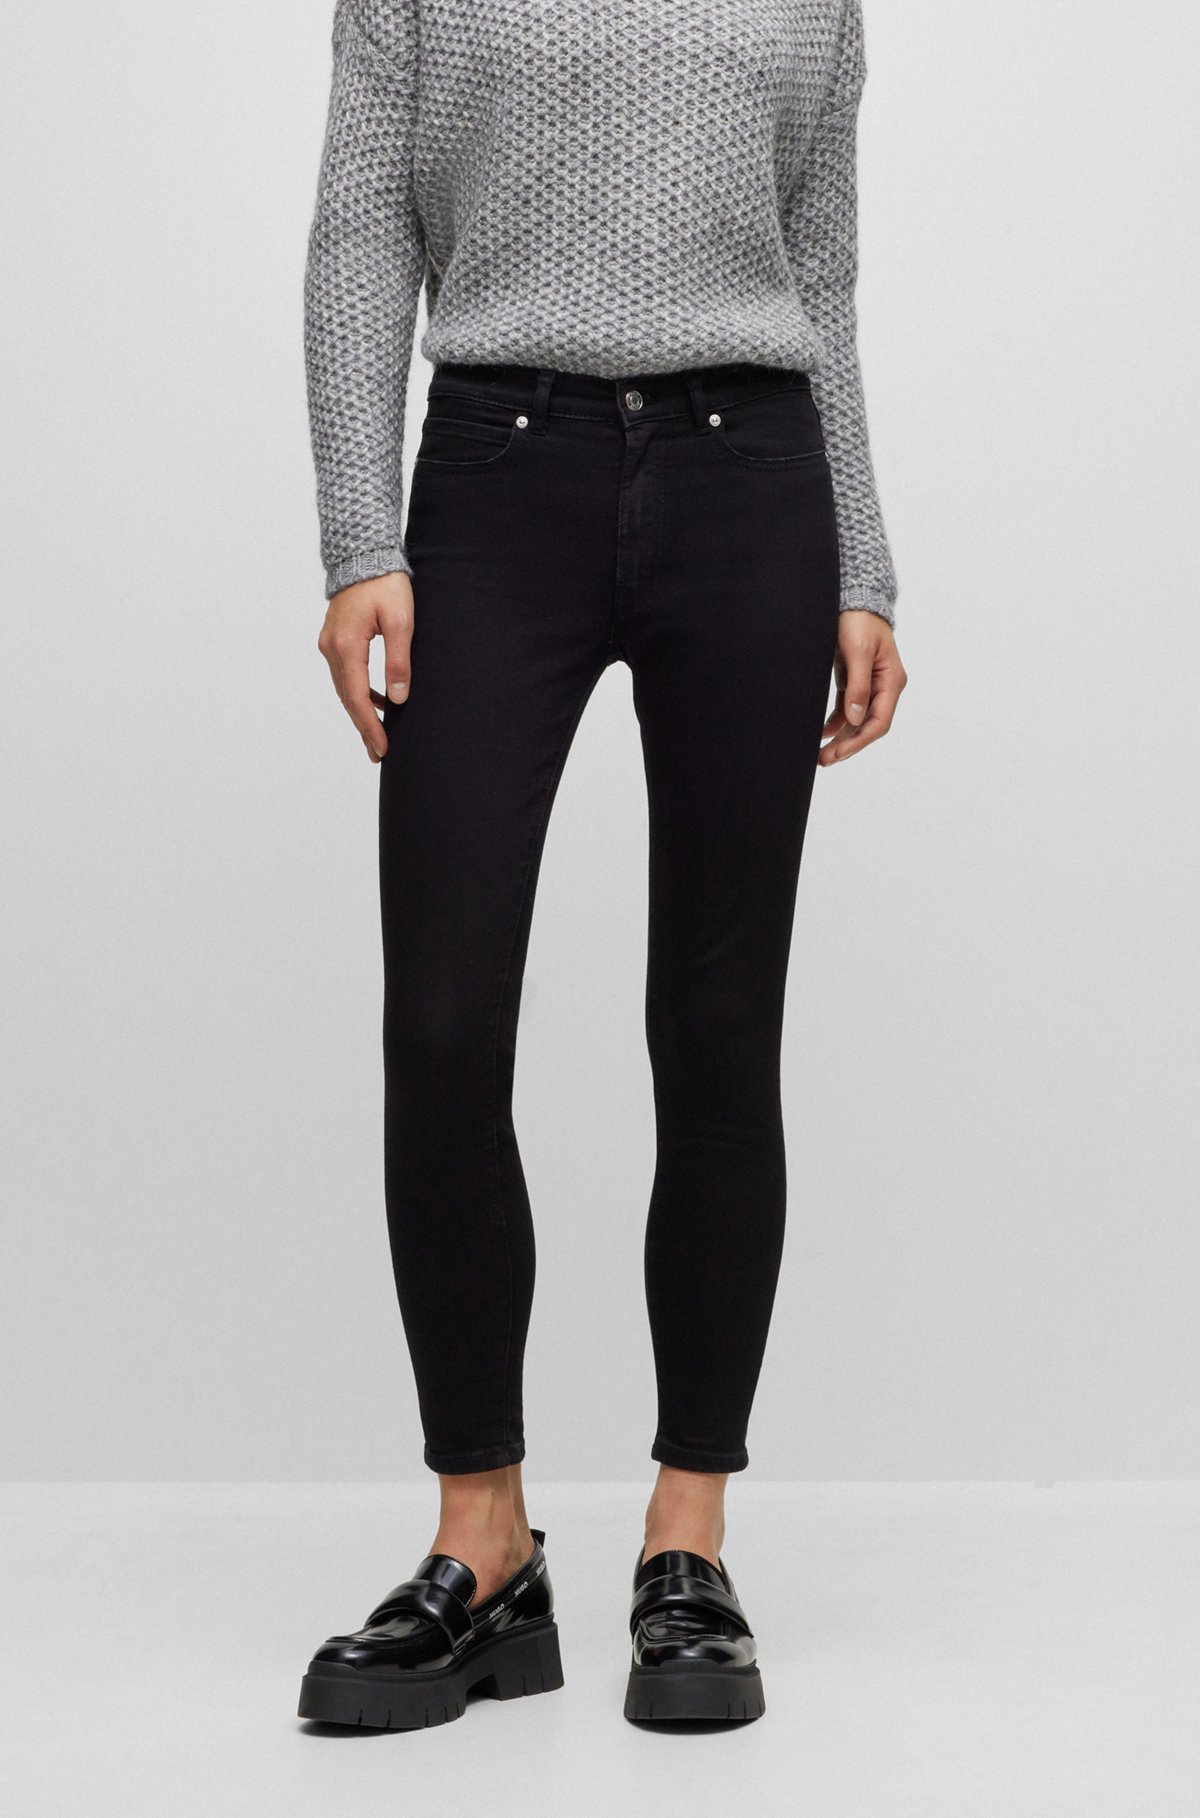 Extra-slim-fit jeans in black comfort-stretch denim, Black